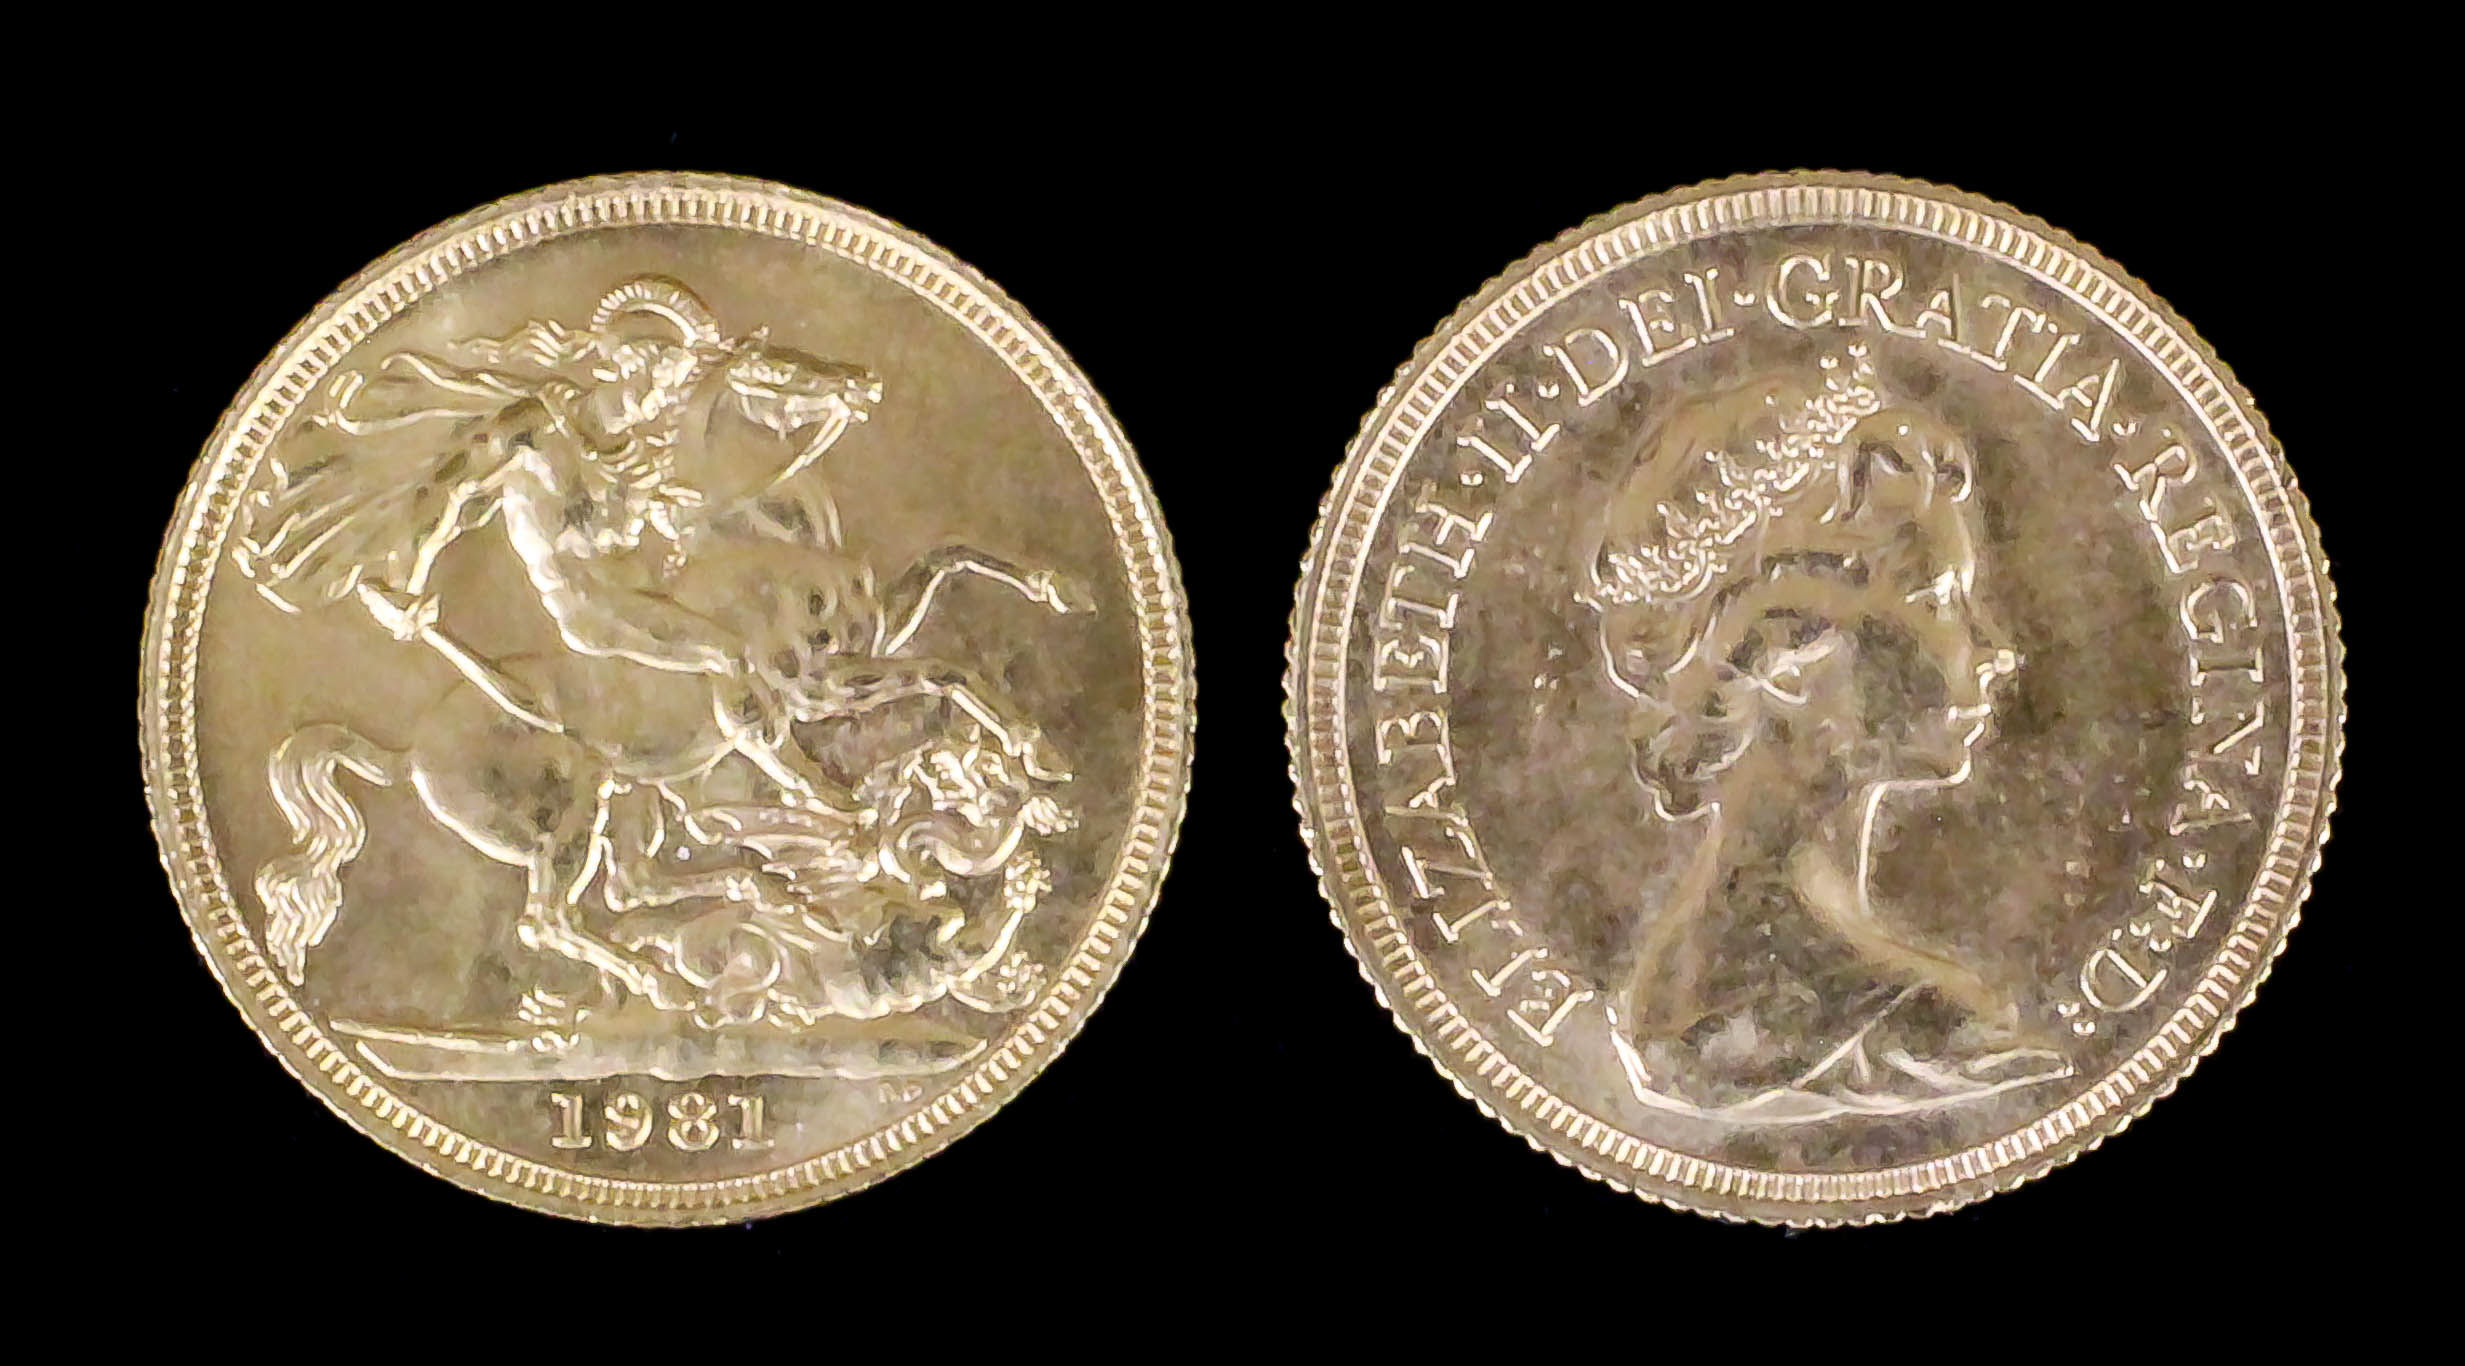 Two Elizabeth II 1981 Sovereigns (Uncirculated)